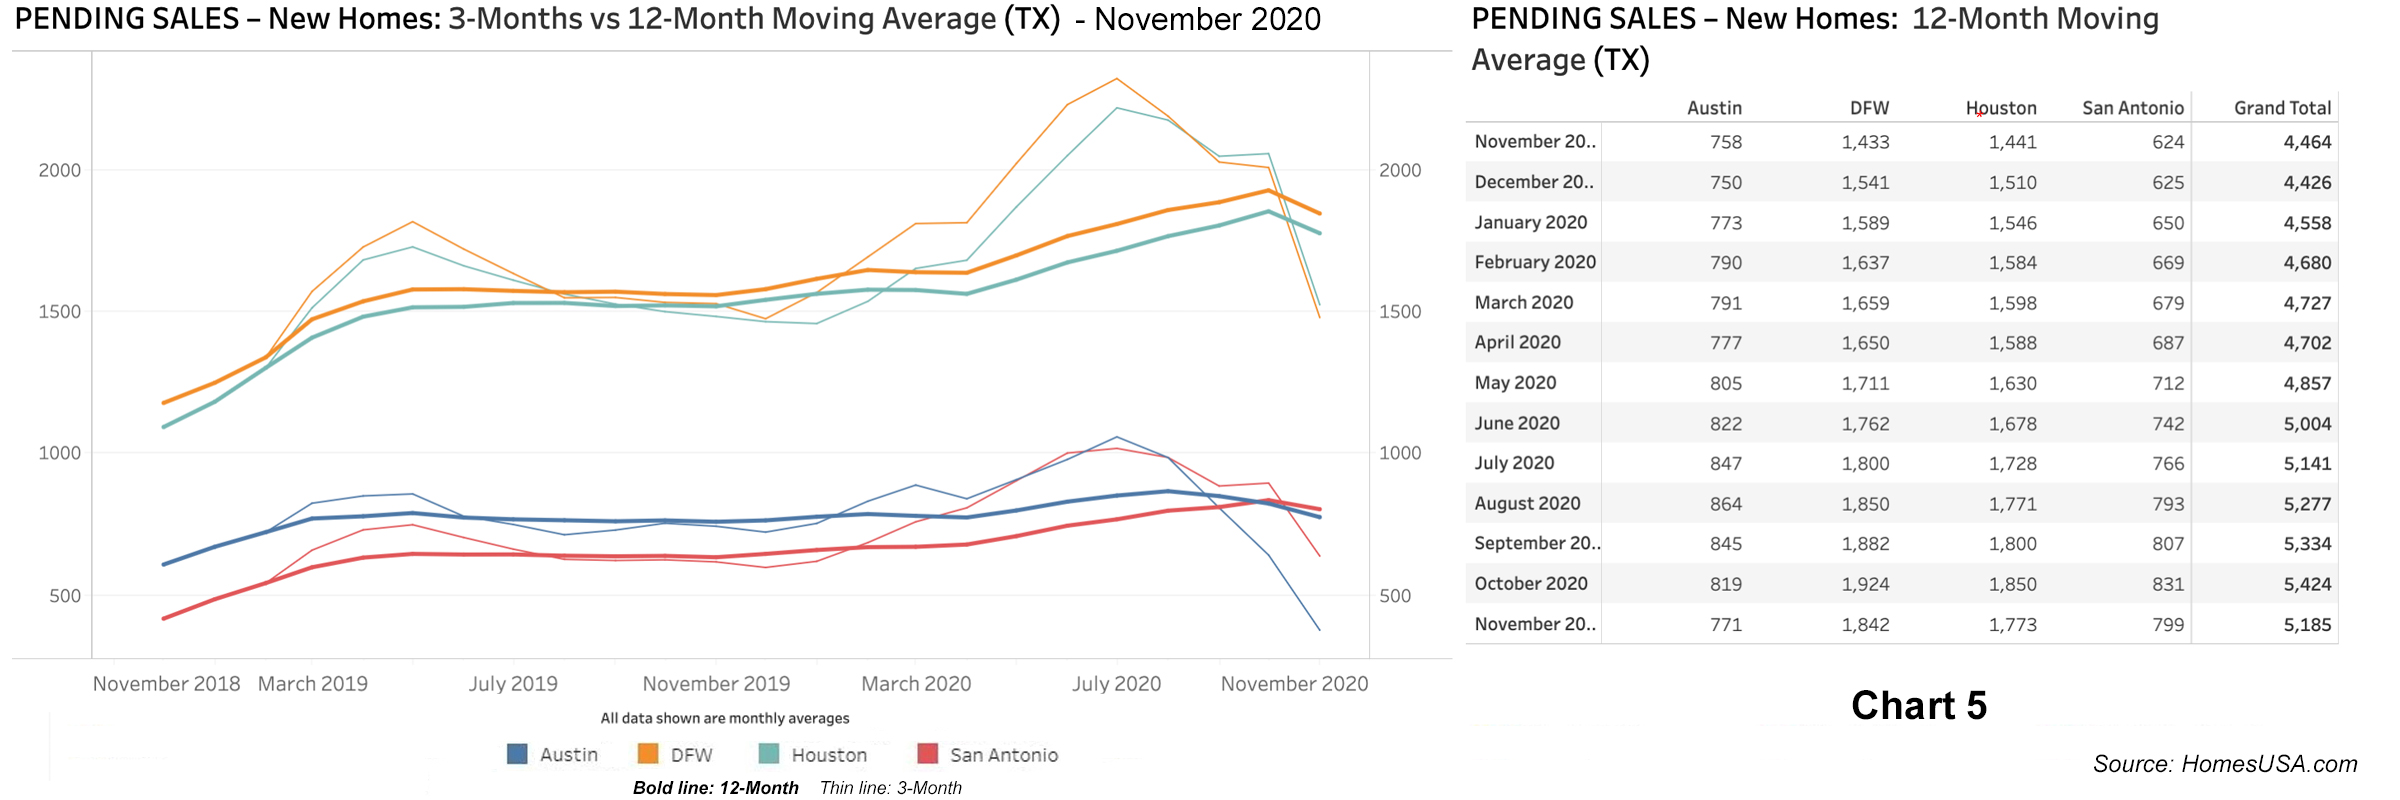 Chart 5: Texas Pending New Homes Sales - November 2020